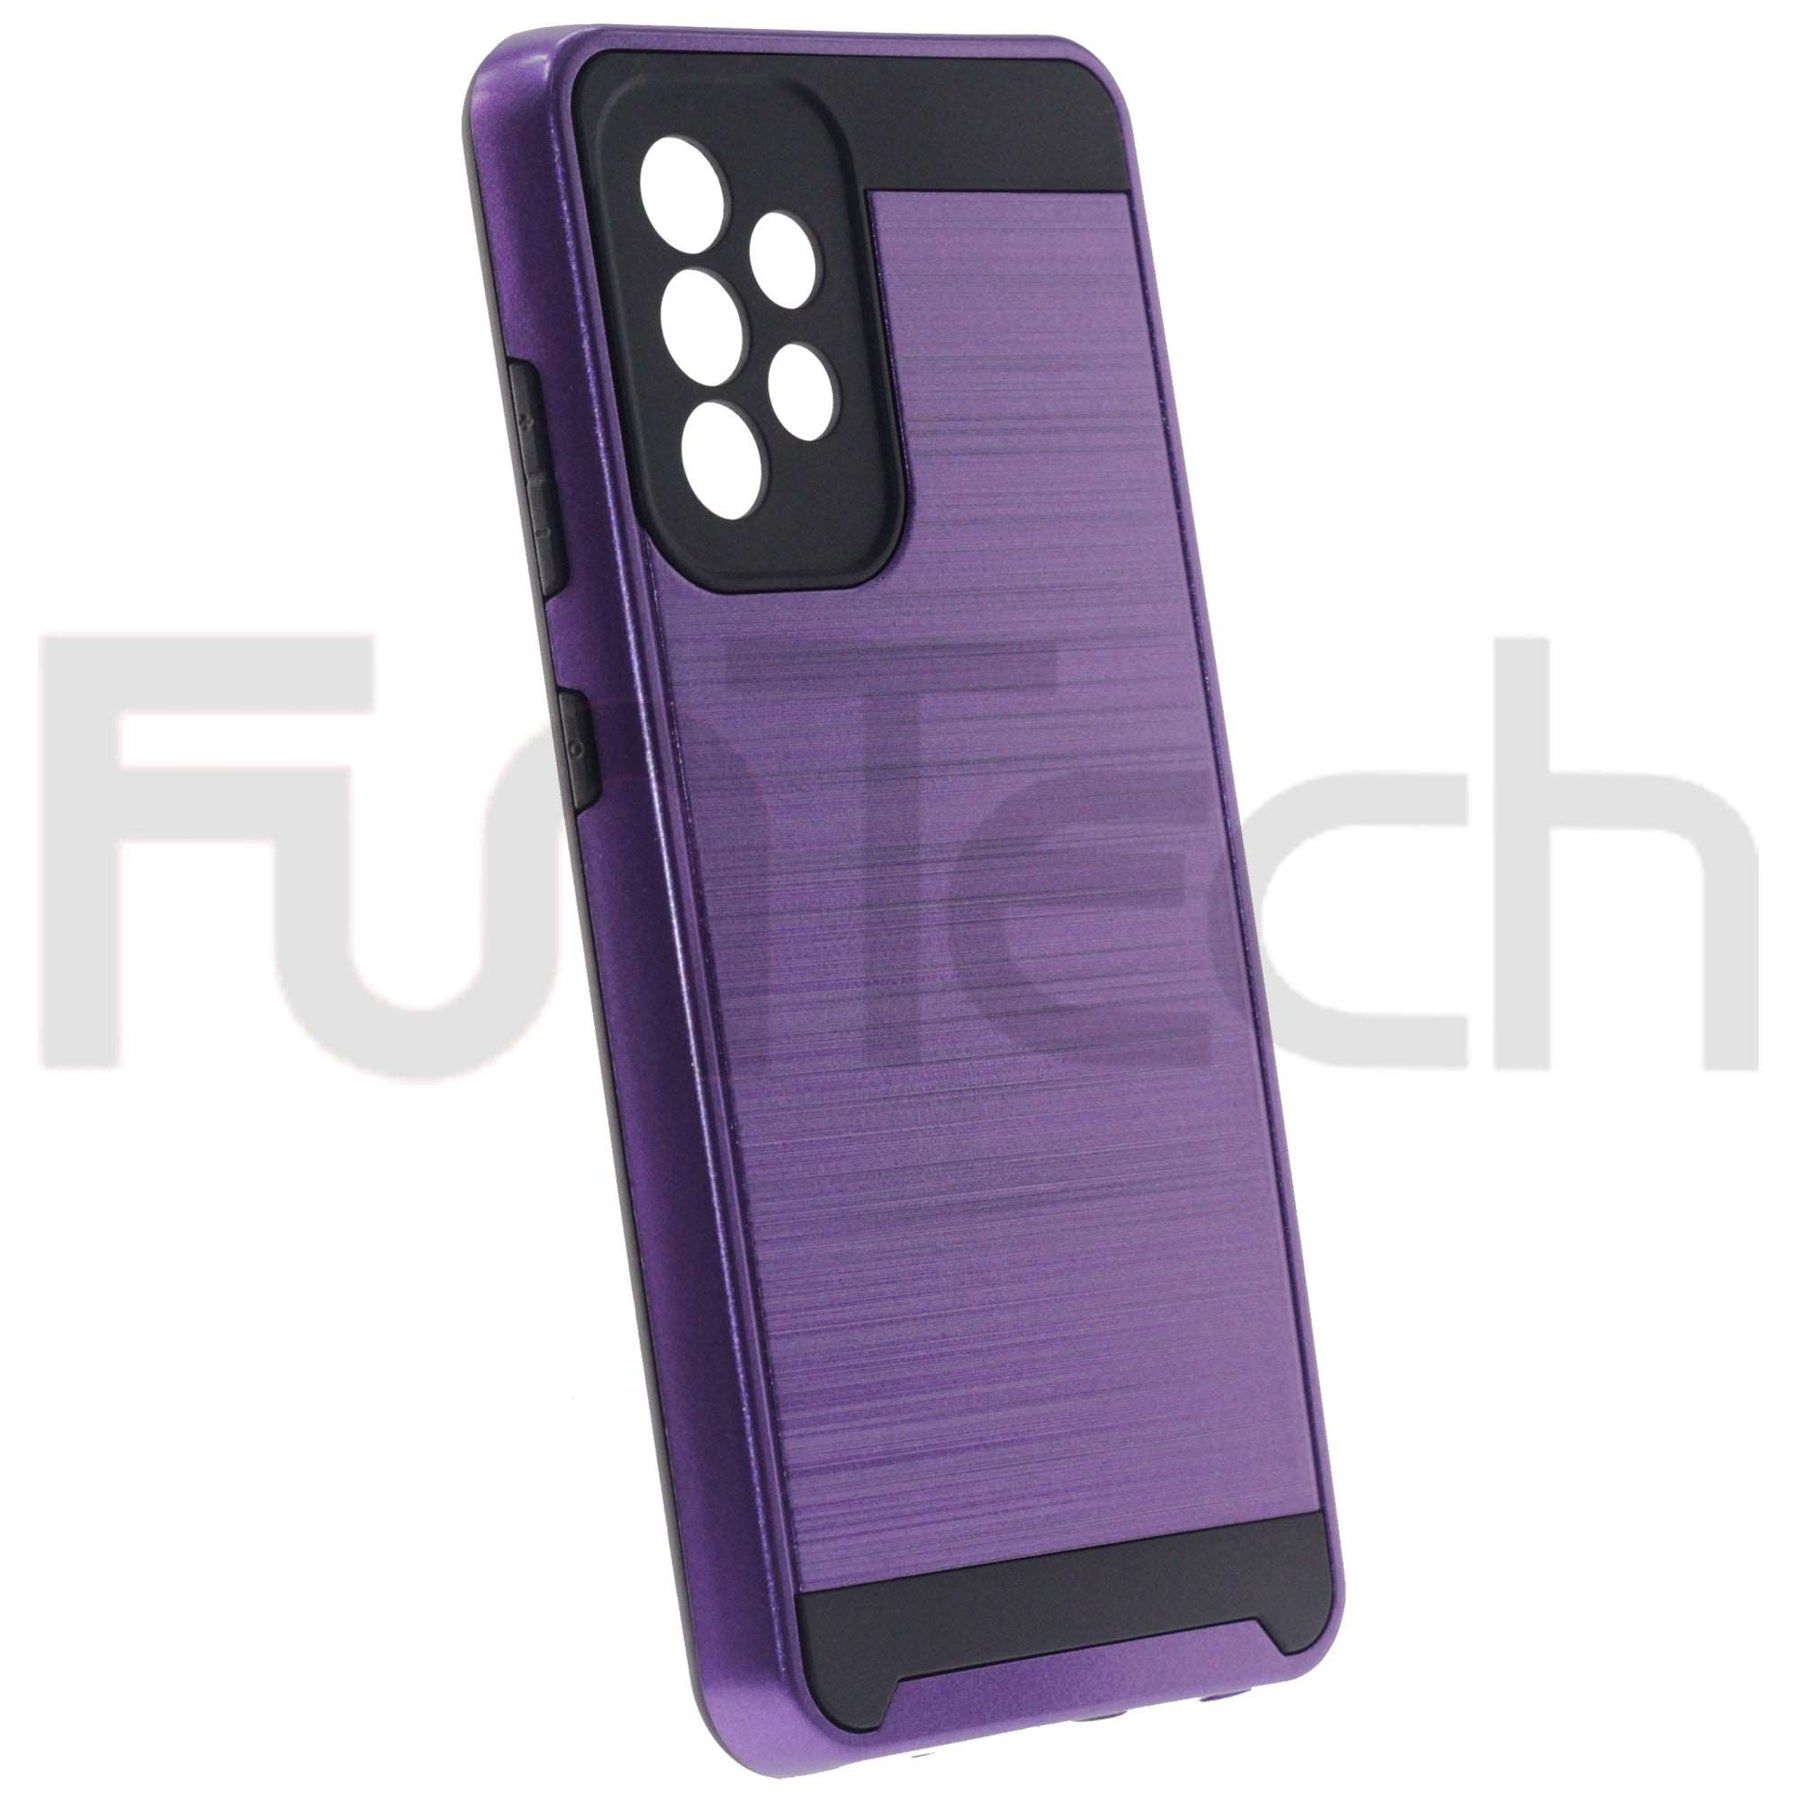 Samsung A52, Slim Armor Case, Color Purple.